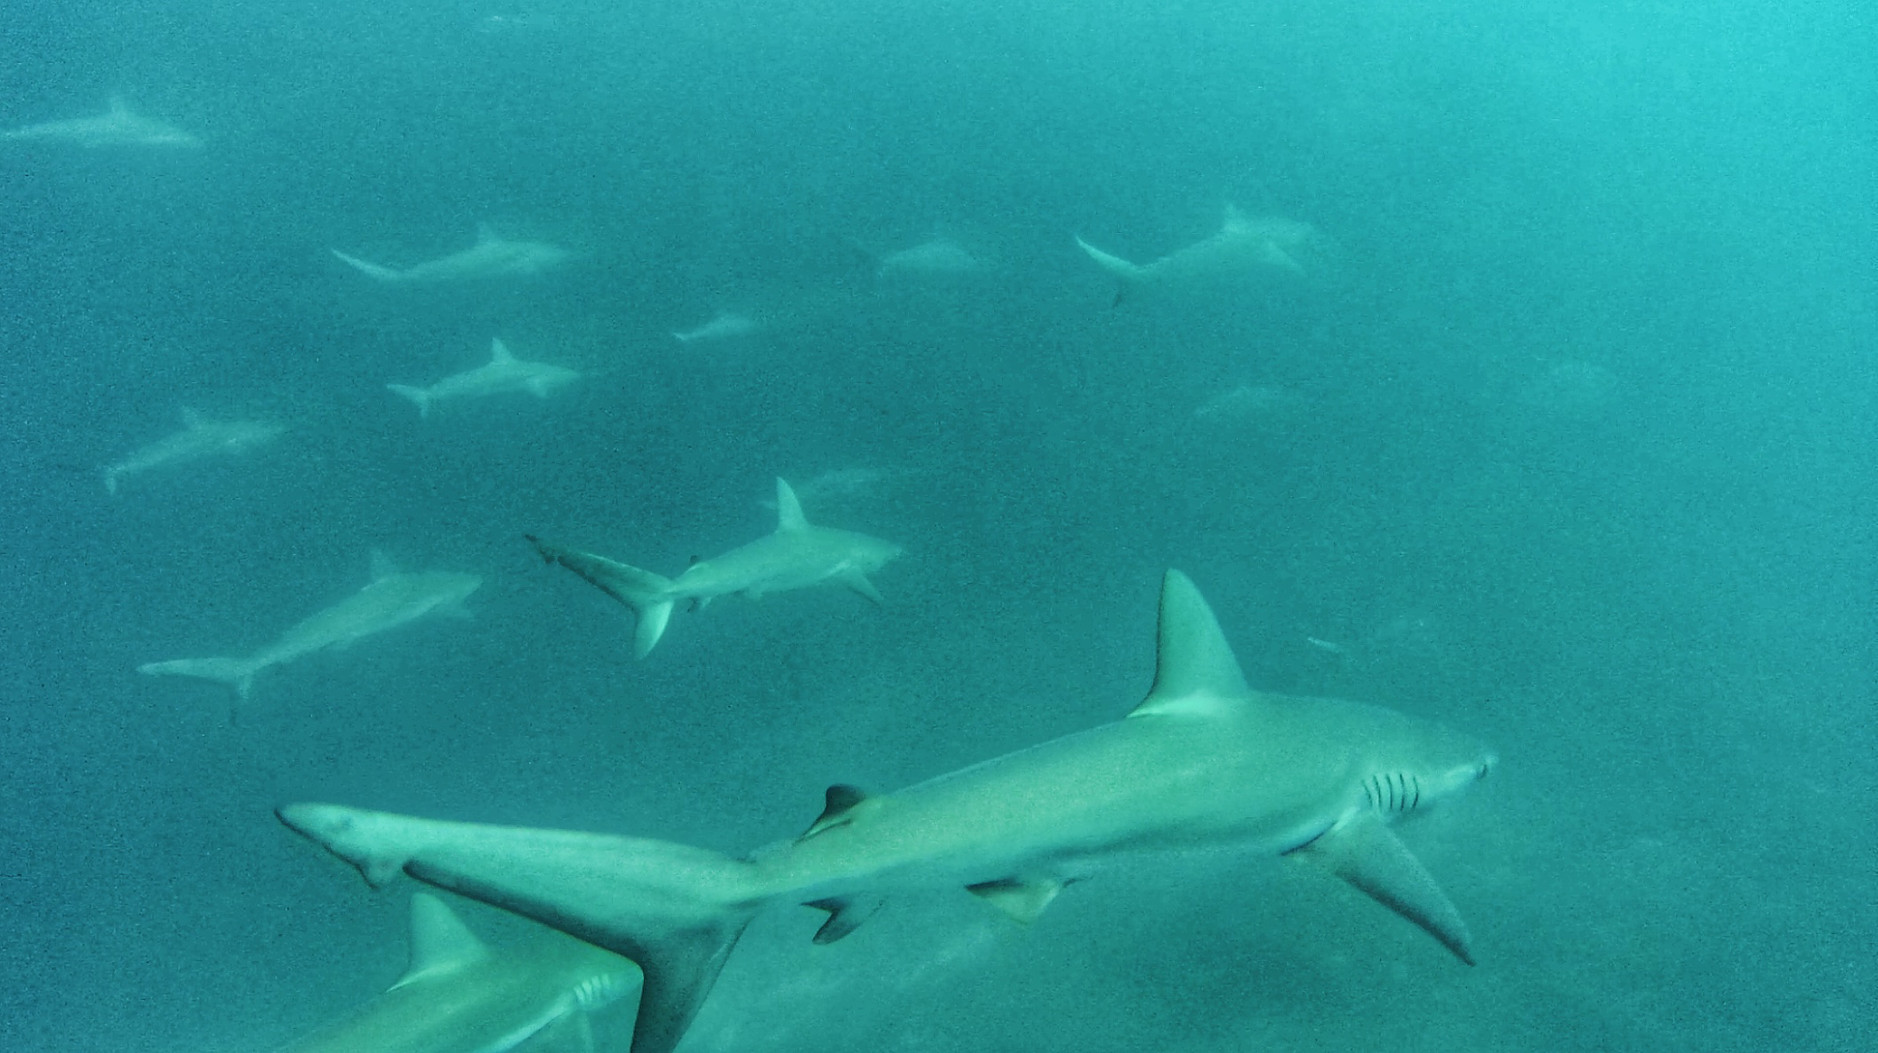 加拉巴哥群島 Ecuador Galapagos Islands Kicker Rock 鎚頭鯊 hammerhead shark